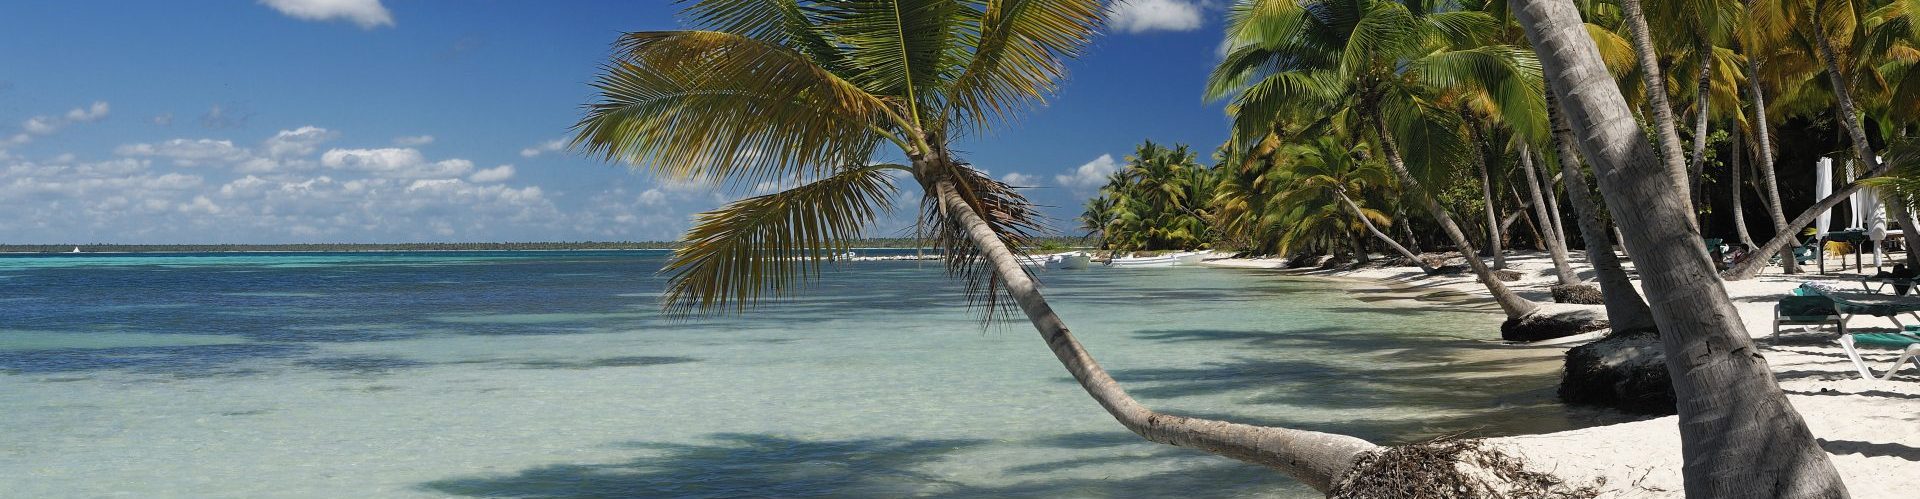 Dominikanische Republik_Isla Saona_Strand mit Palmen_Reisen